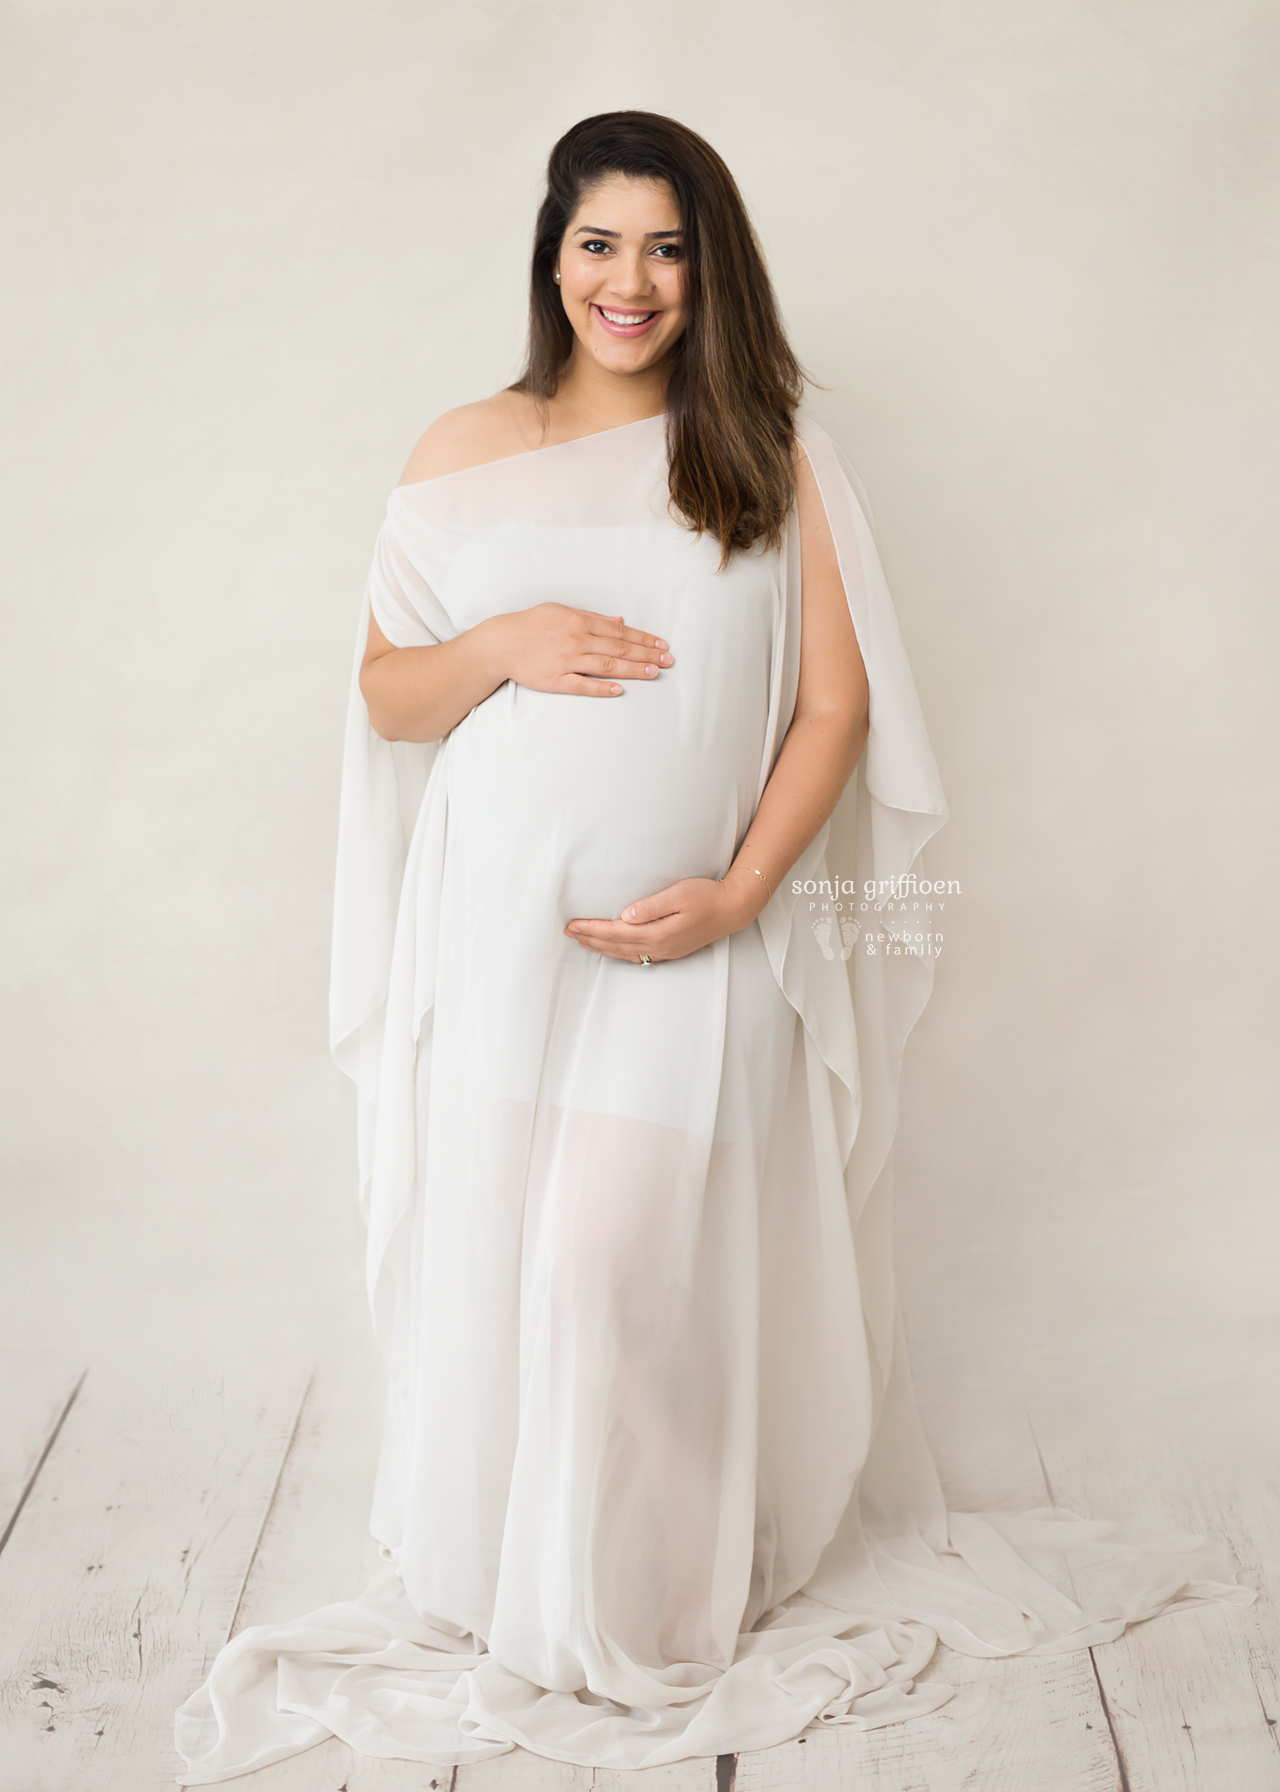 Noor-Maternity-Brisbane-Newborn-Photographer-Sonja-Griffioen-06b.jpg